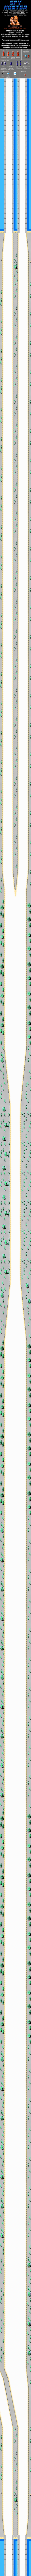 Spy Hunter - Snow Area - Nintendo NES Map